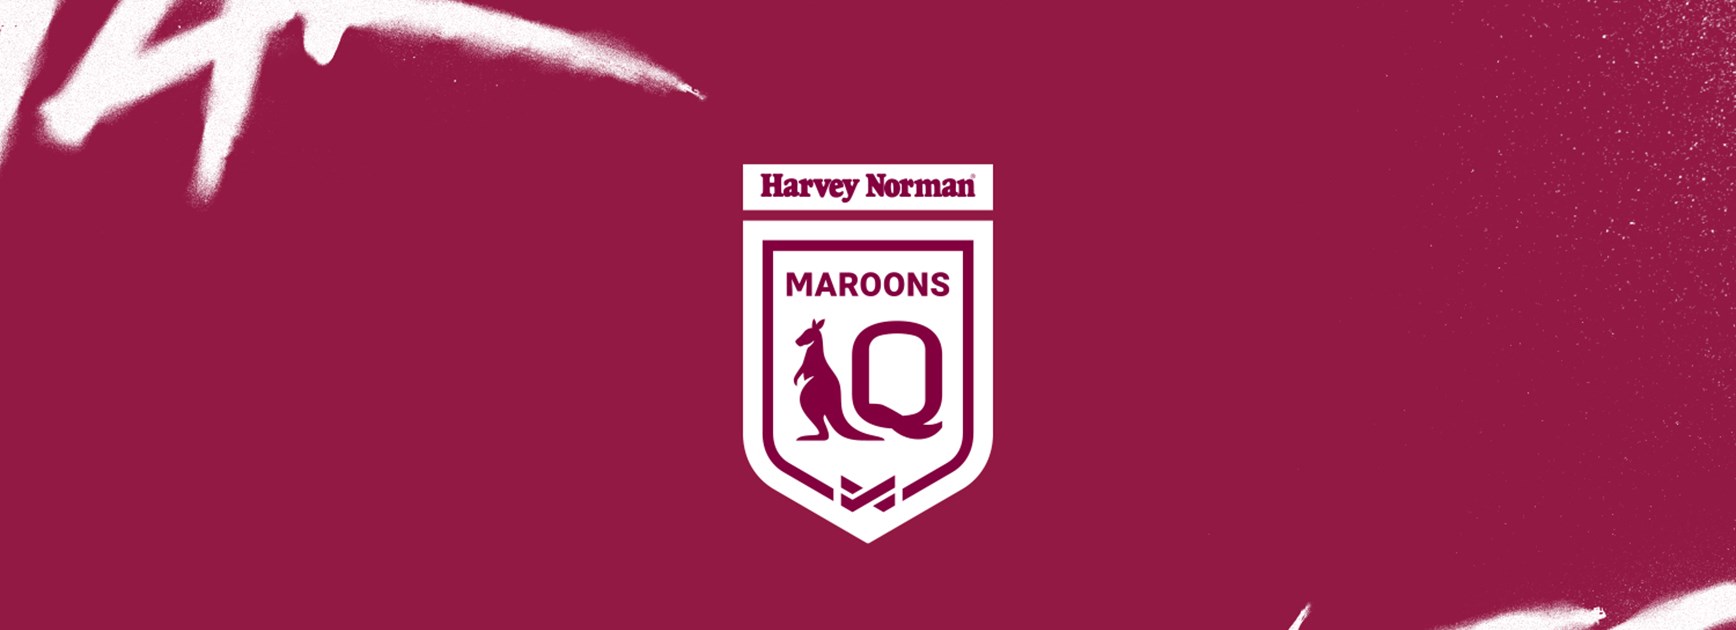 Harvey Norman Queensland Maroons squad named for series decider